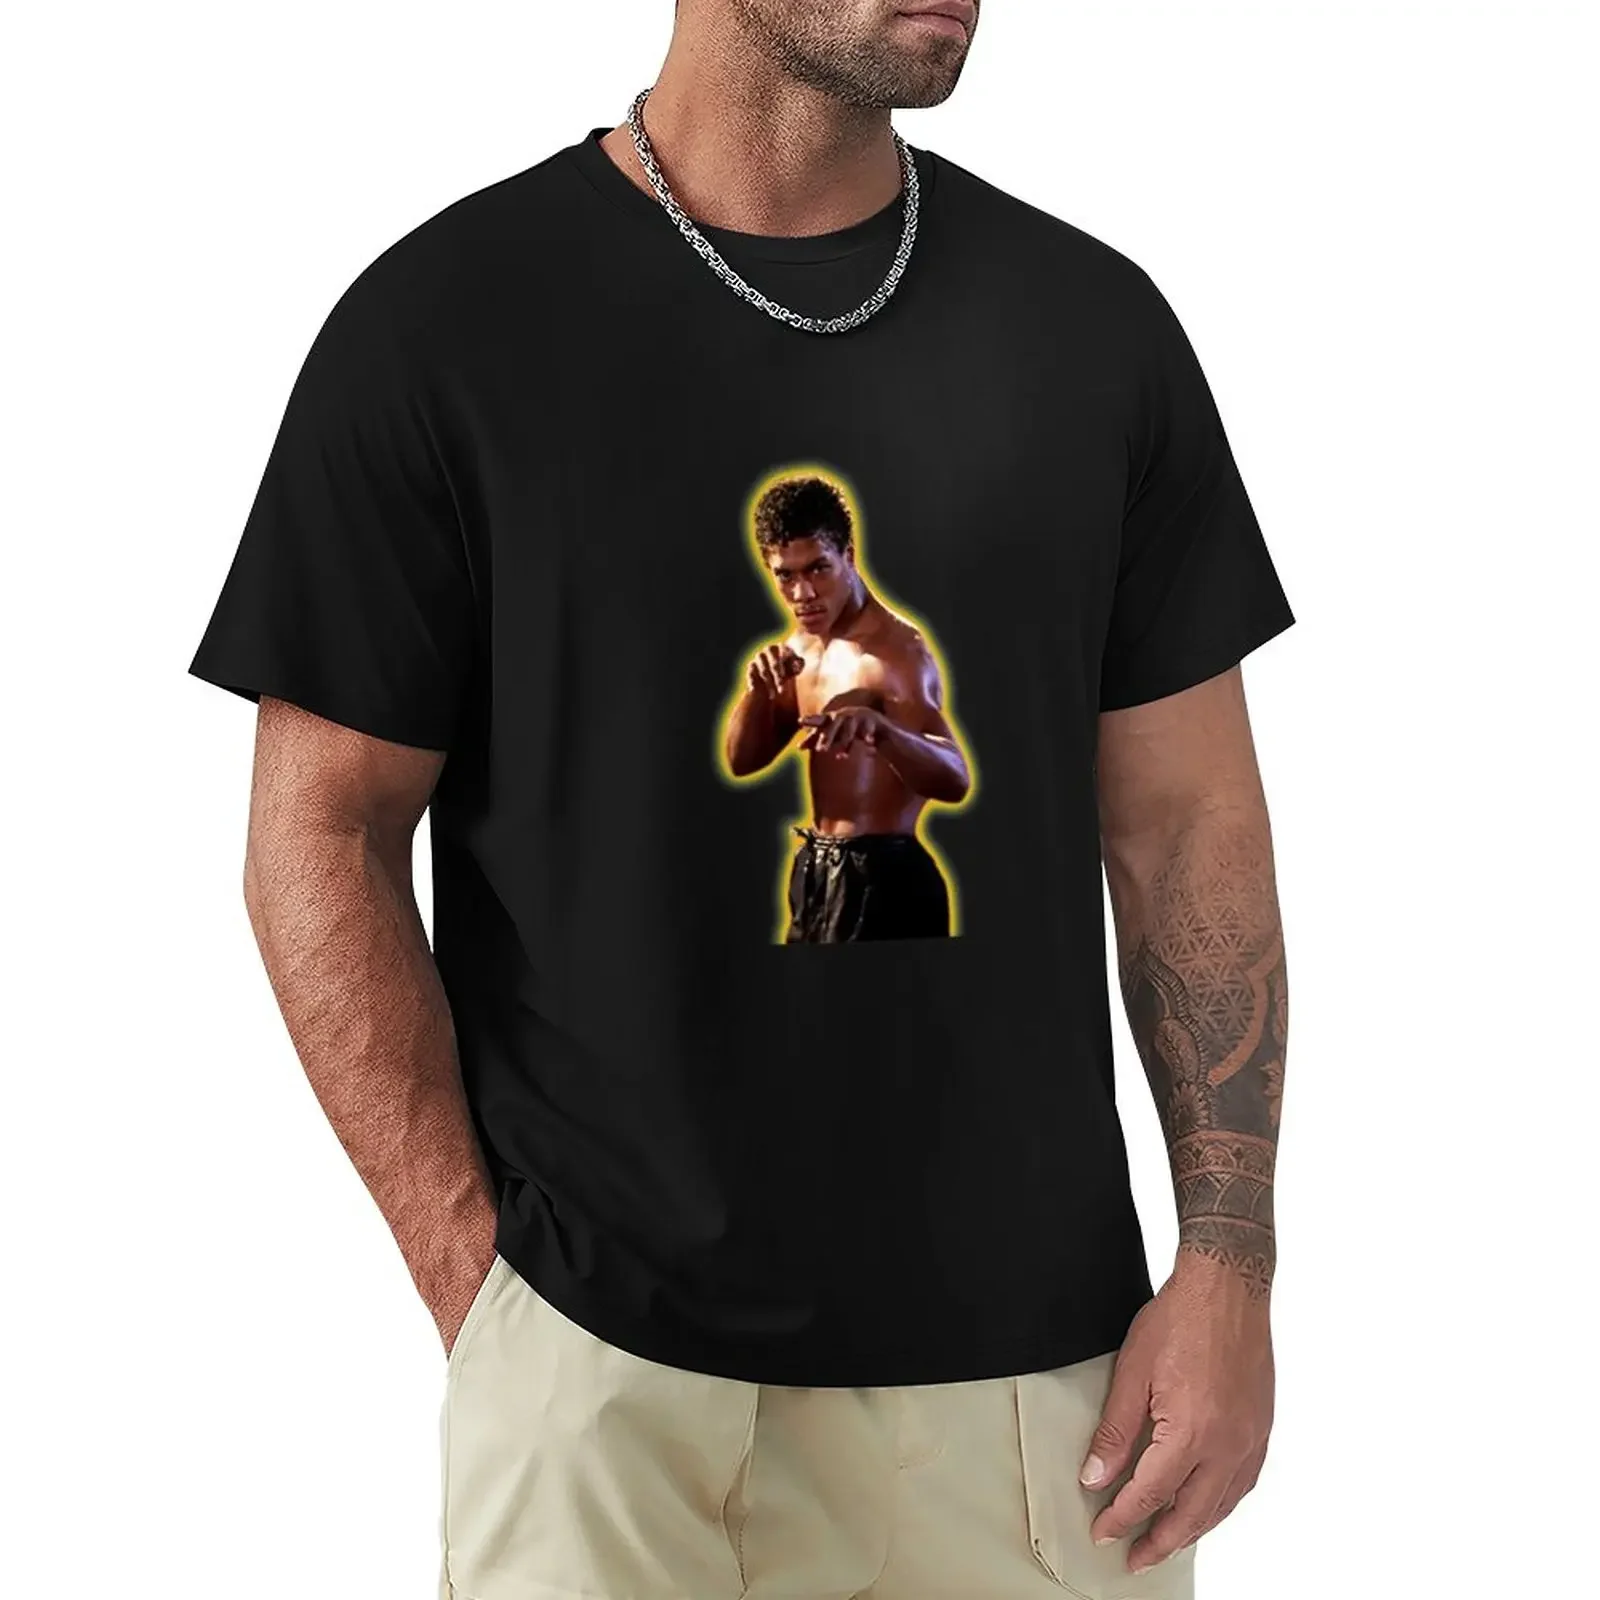 

Bruce Leroy T-Shirt oversizeds customizeds animal prinfor boys vintage fruit of the loom mens t shirts